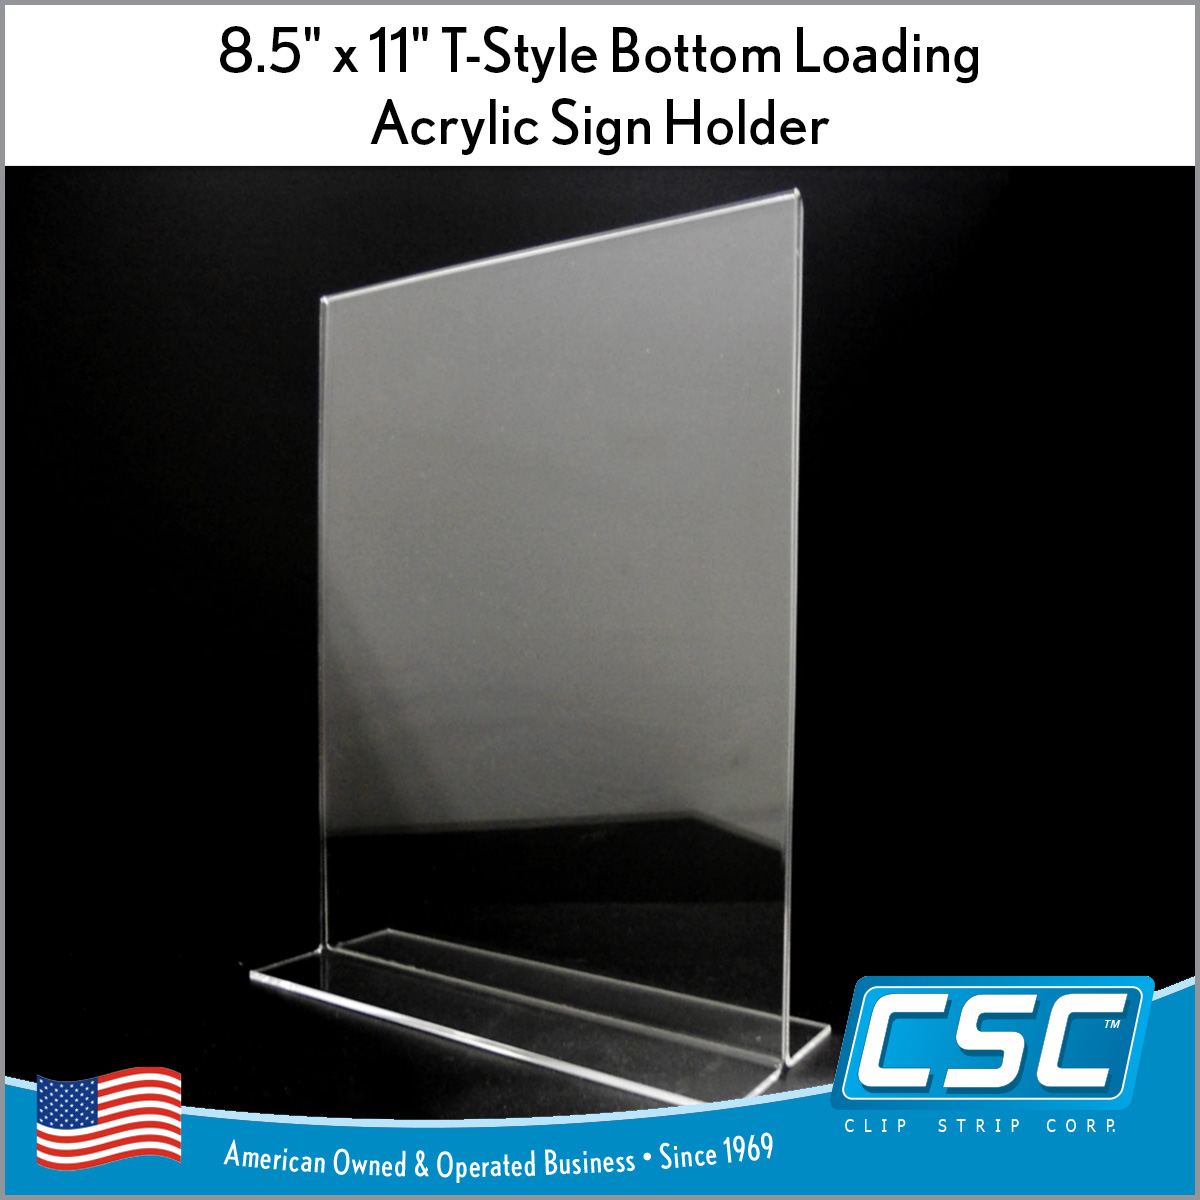 8.5" x 11" T-Style Acrylic Sign Holder Bottom Loading Clip Strip®